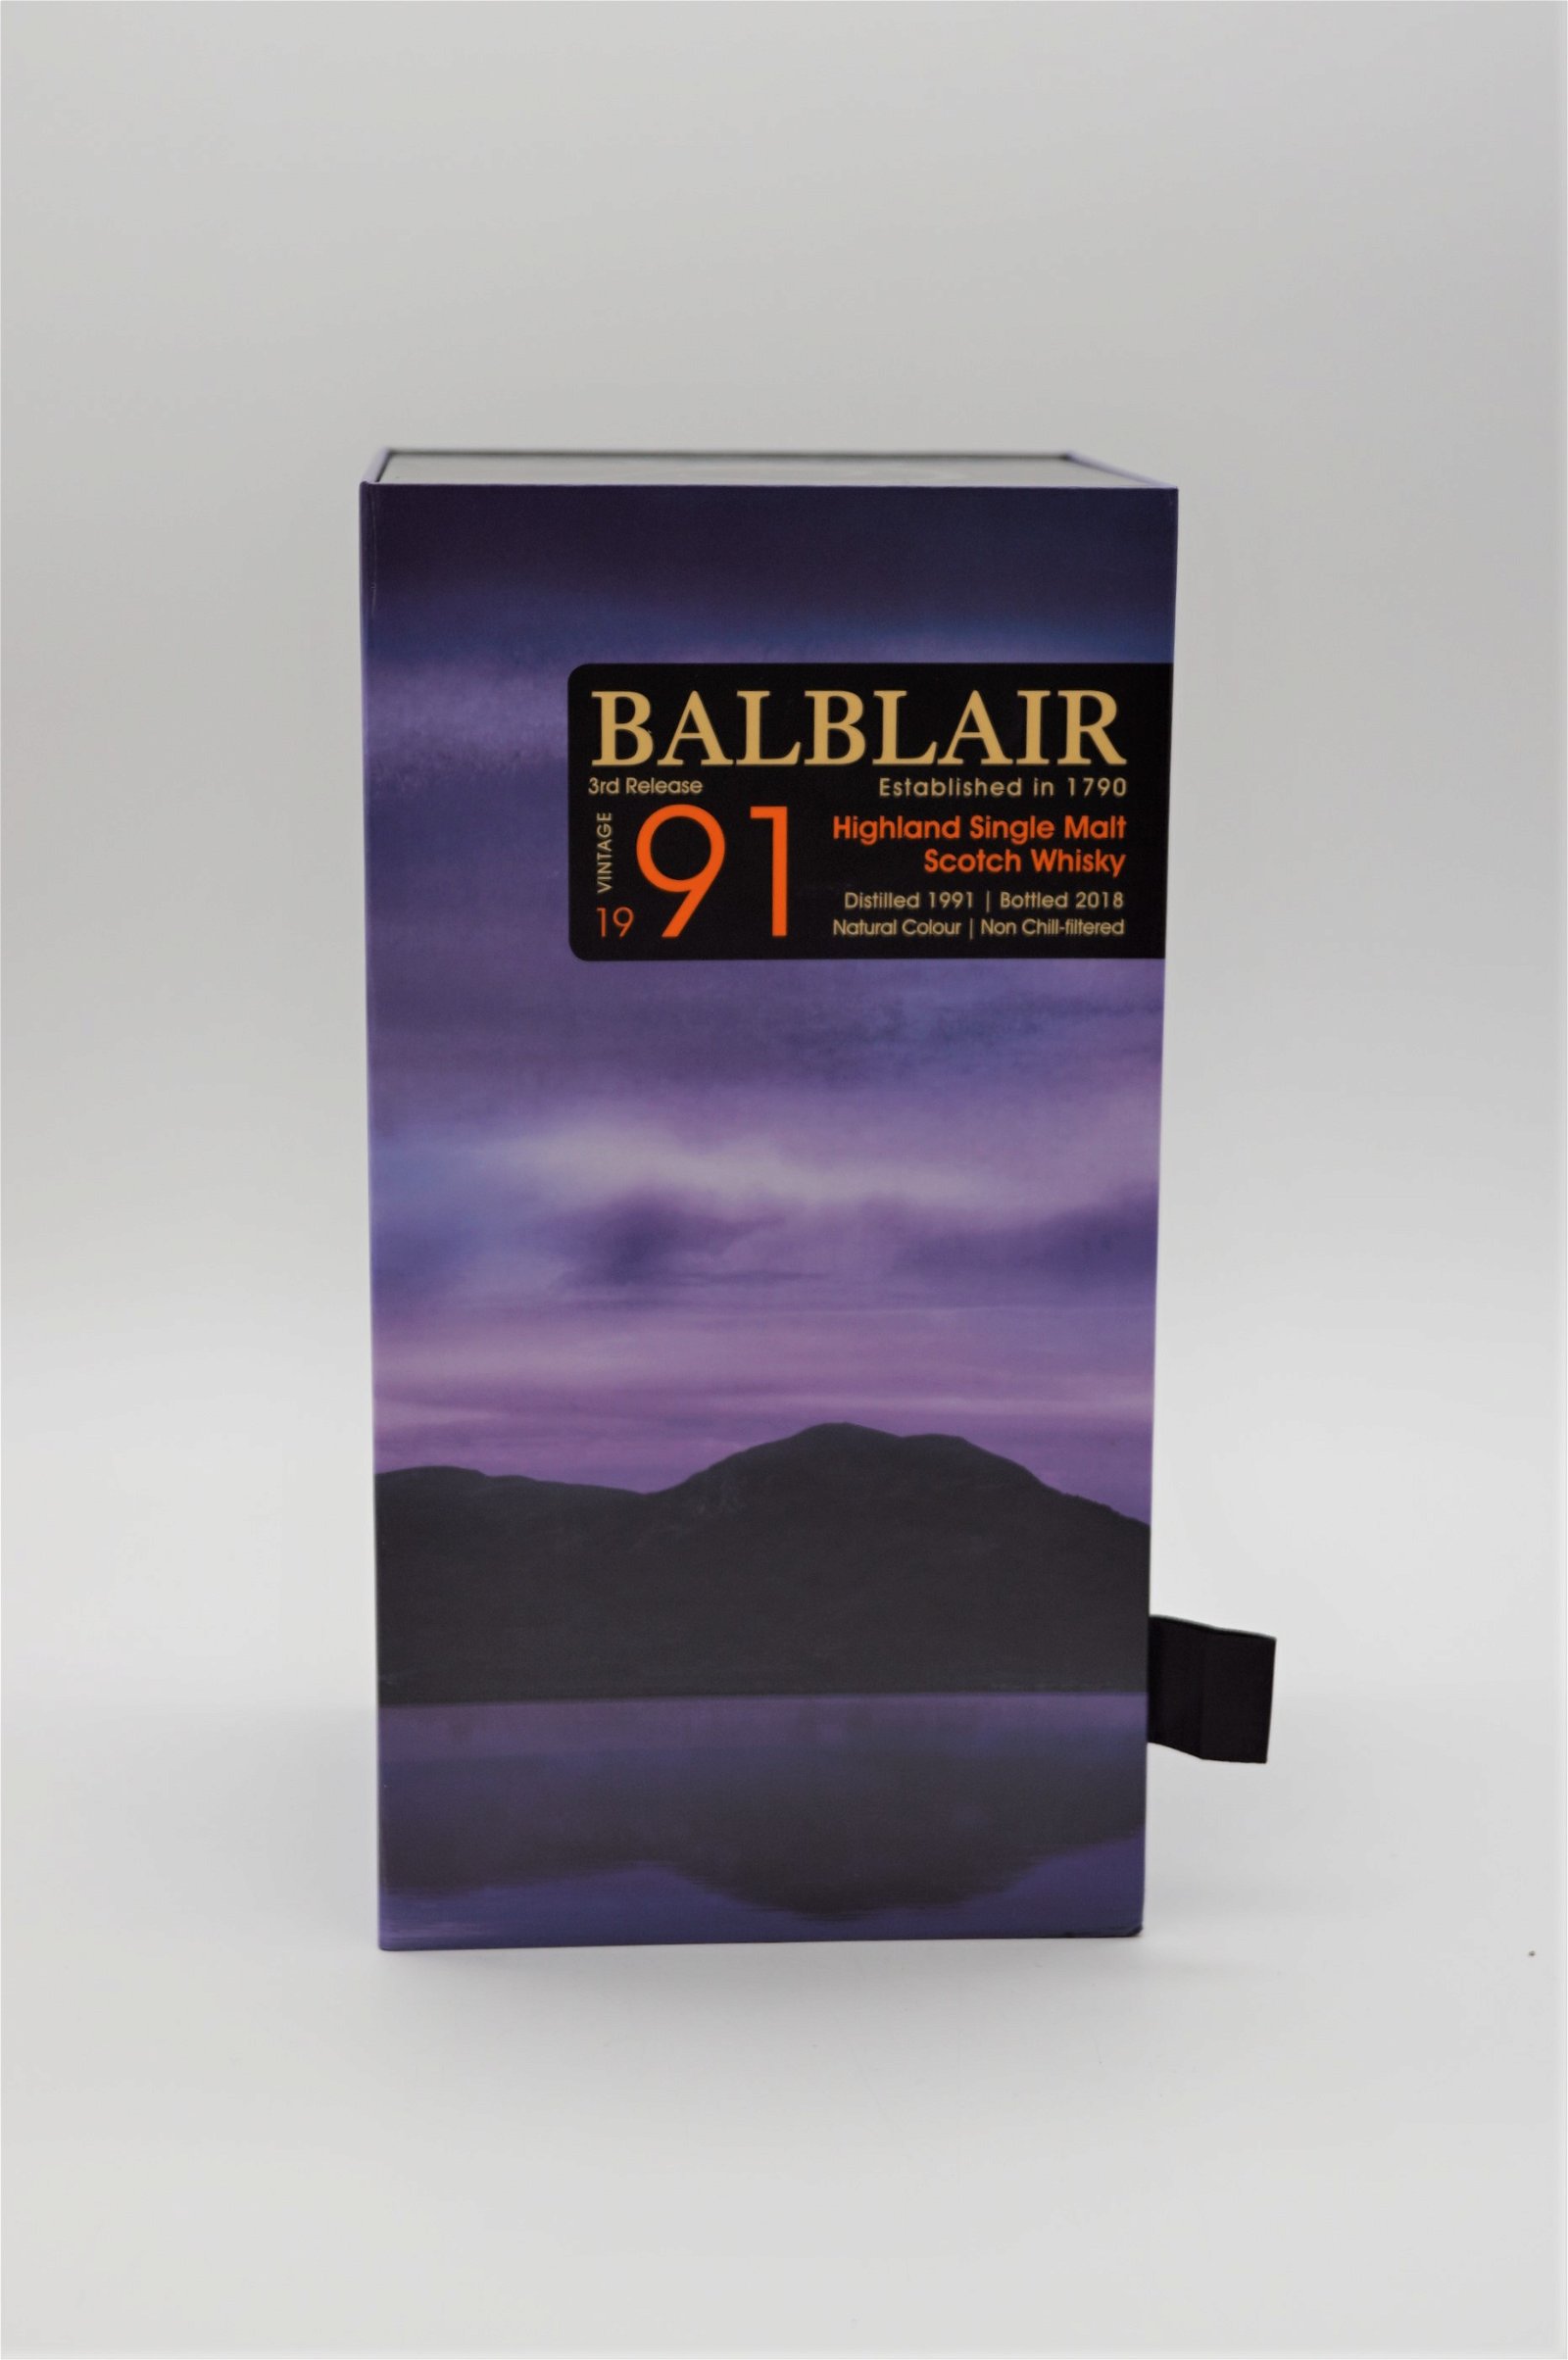 Balblair 1999 3rd Release Highland Single Malt Scotch Whisky